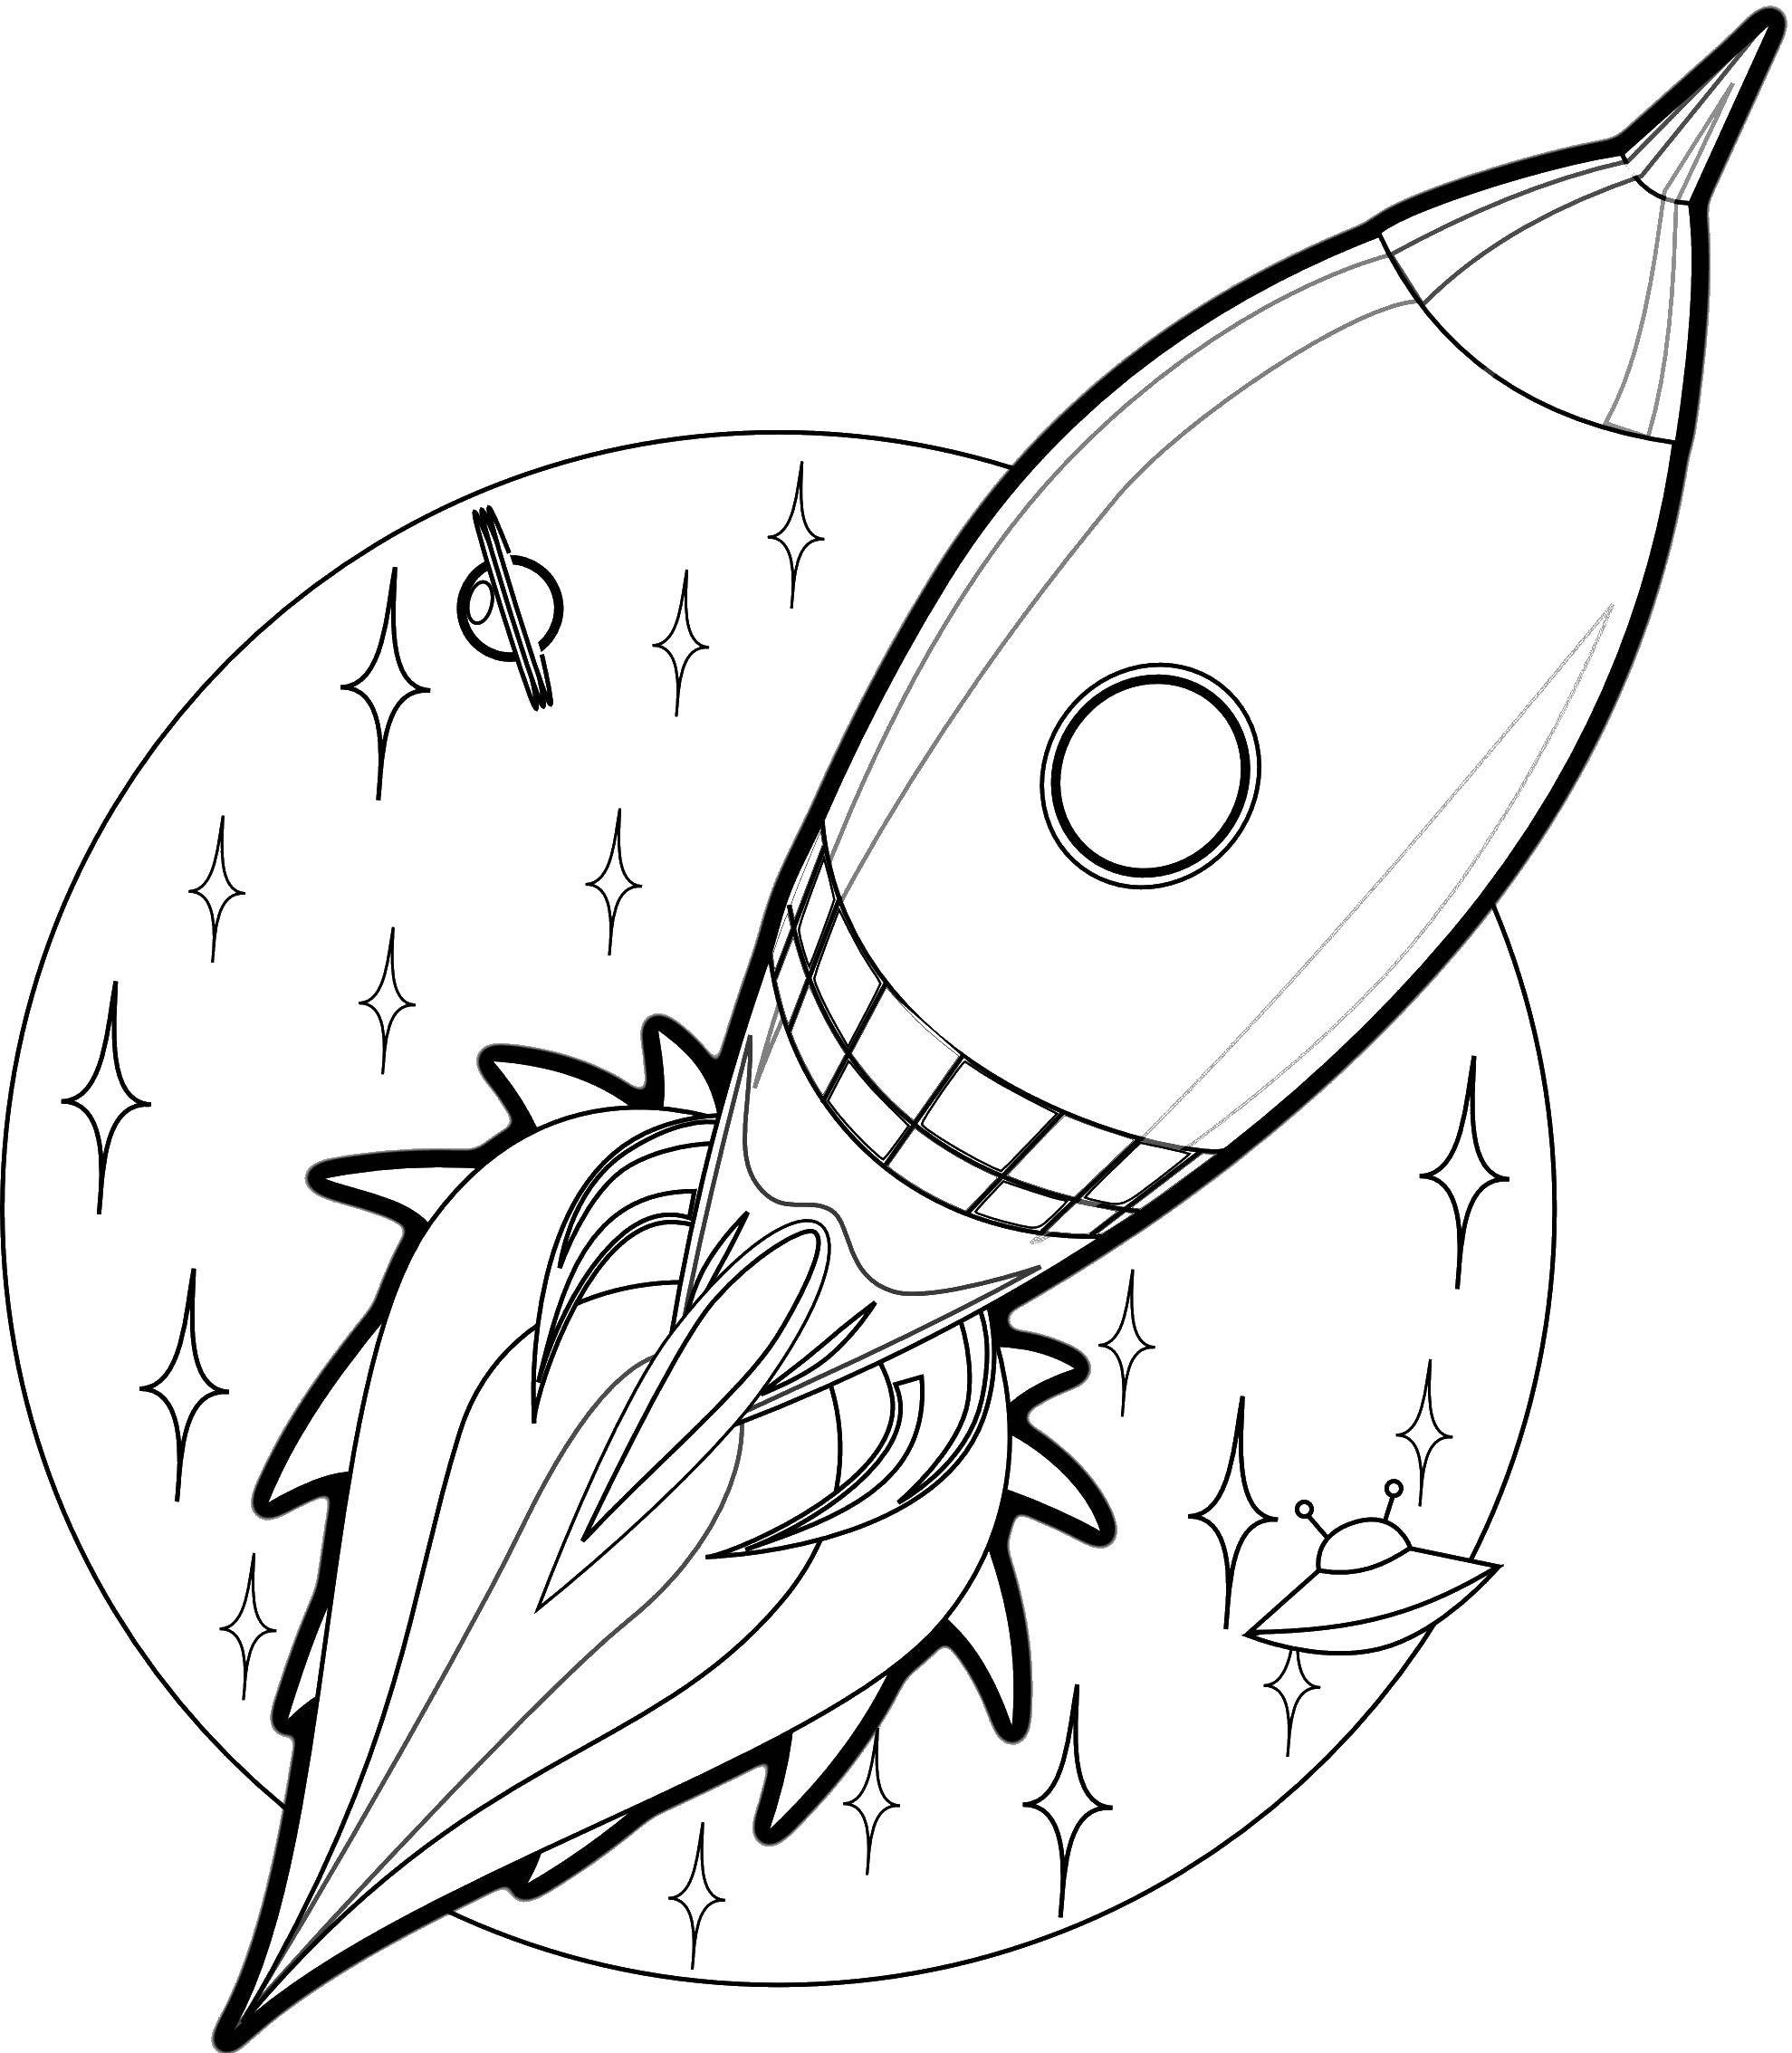 Название: Раскраска Космическая ракета. Категория: ракеты. Теги: космос, ракеты, корабли, планета.